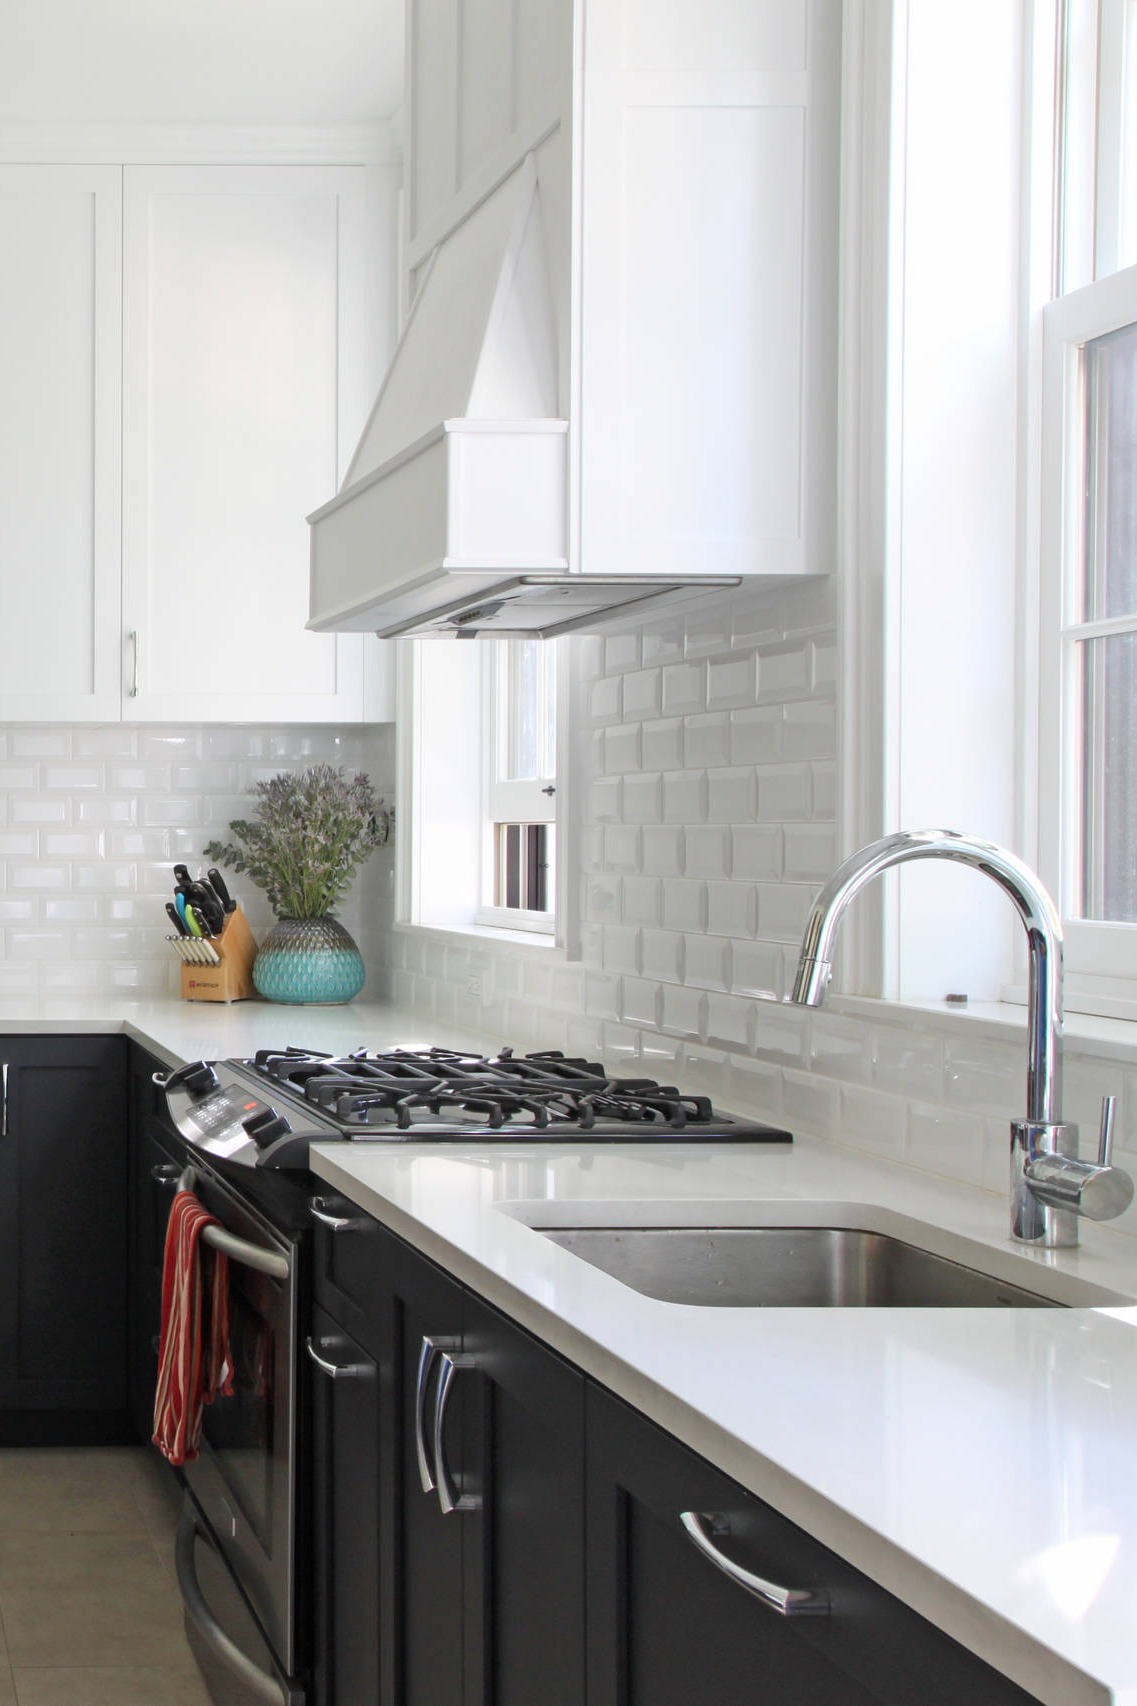 Two Tone Kitchen Cabinets White Quartz Countertops Subway Tile Backsplash Gray Porcelain Floor